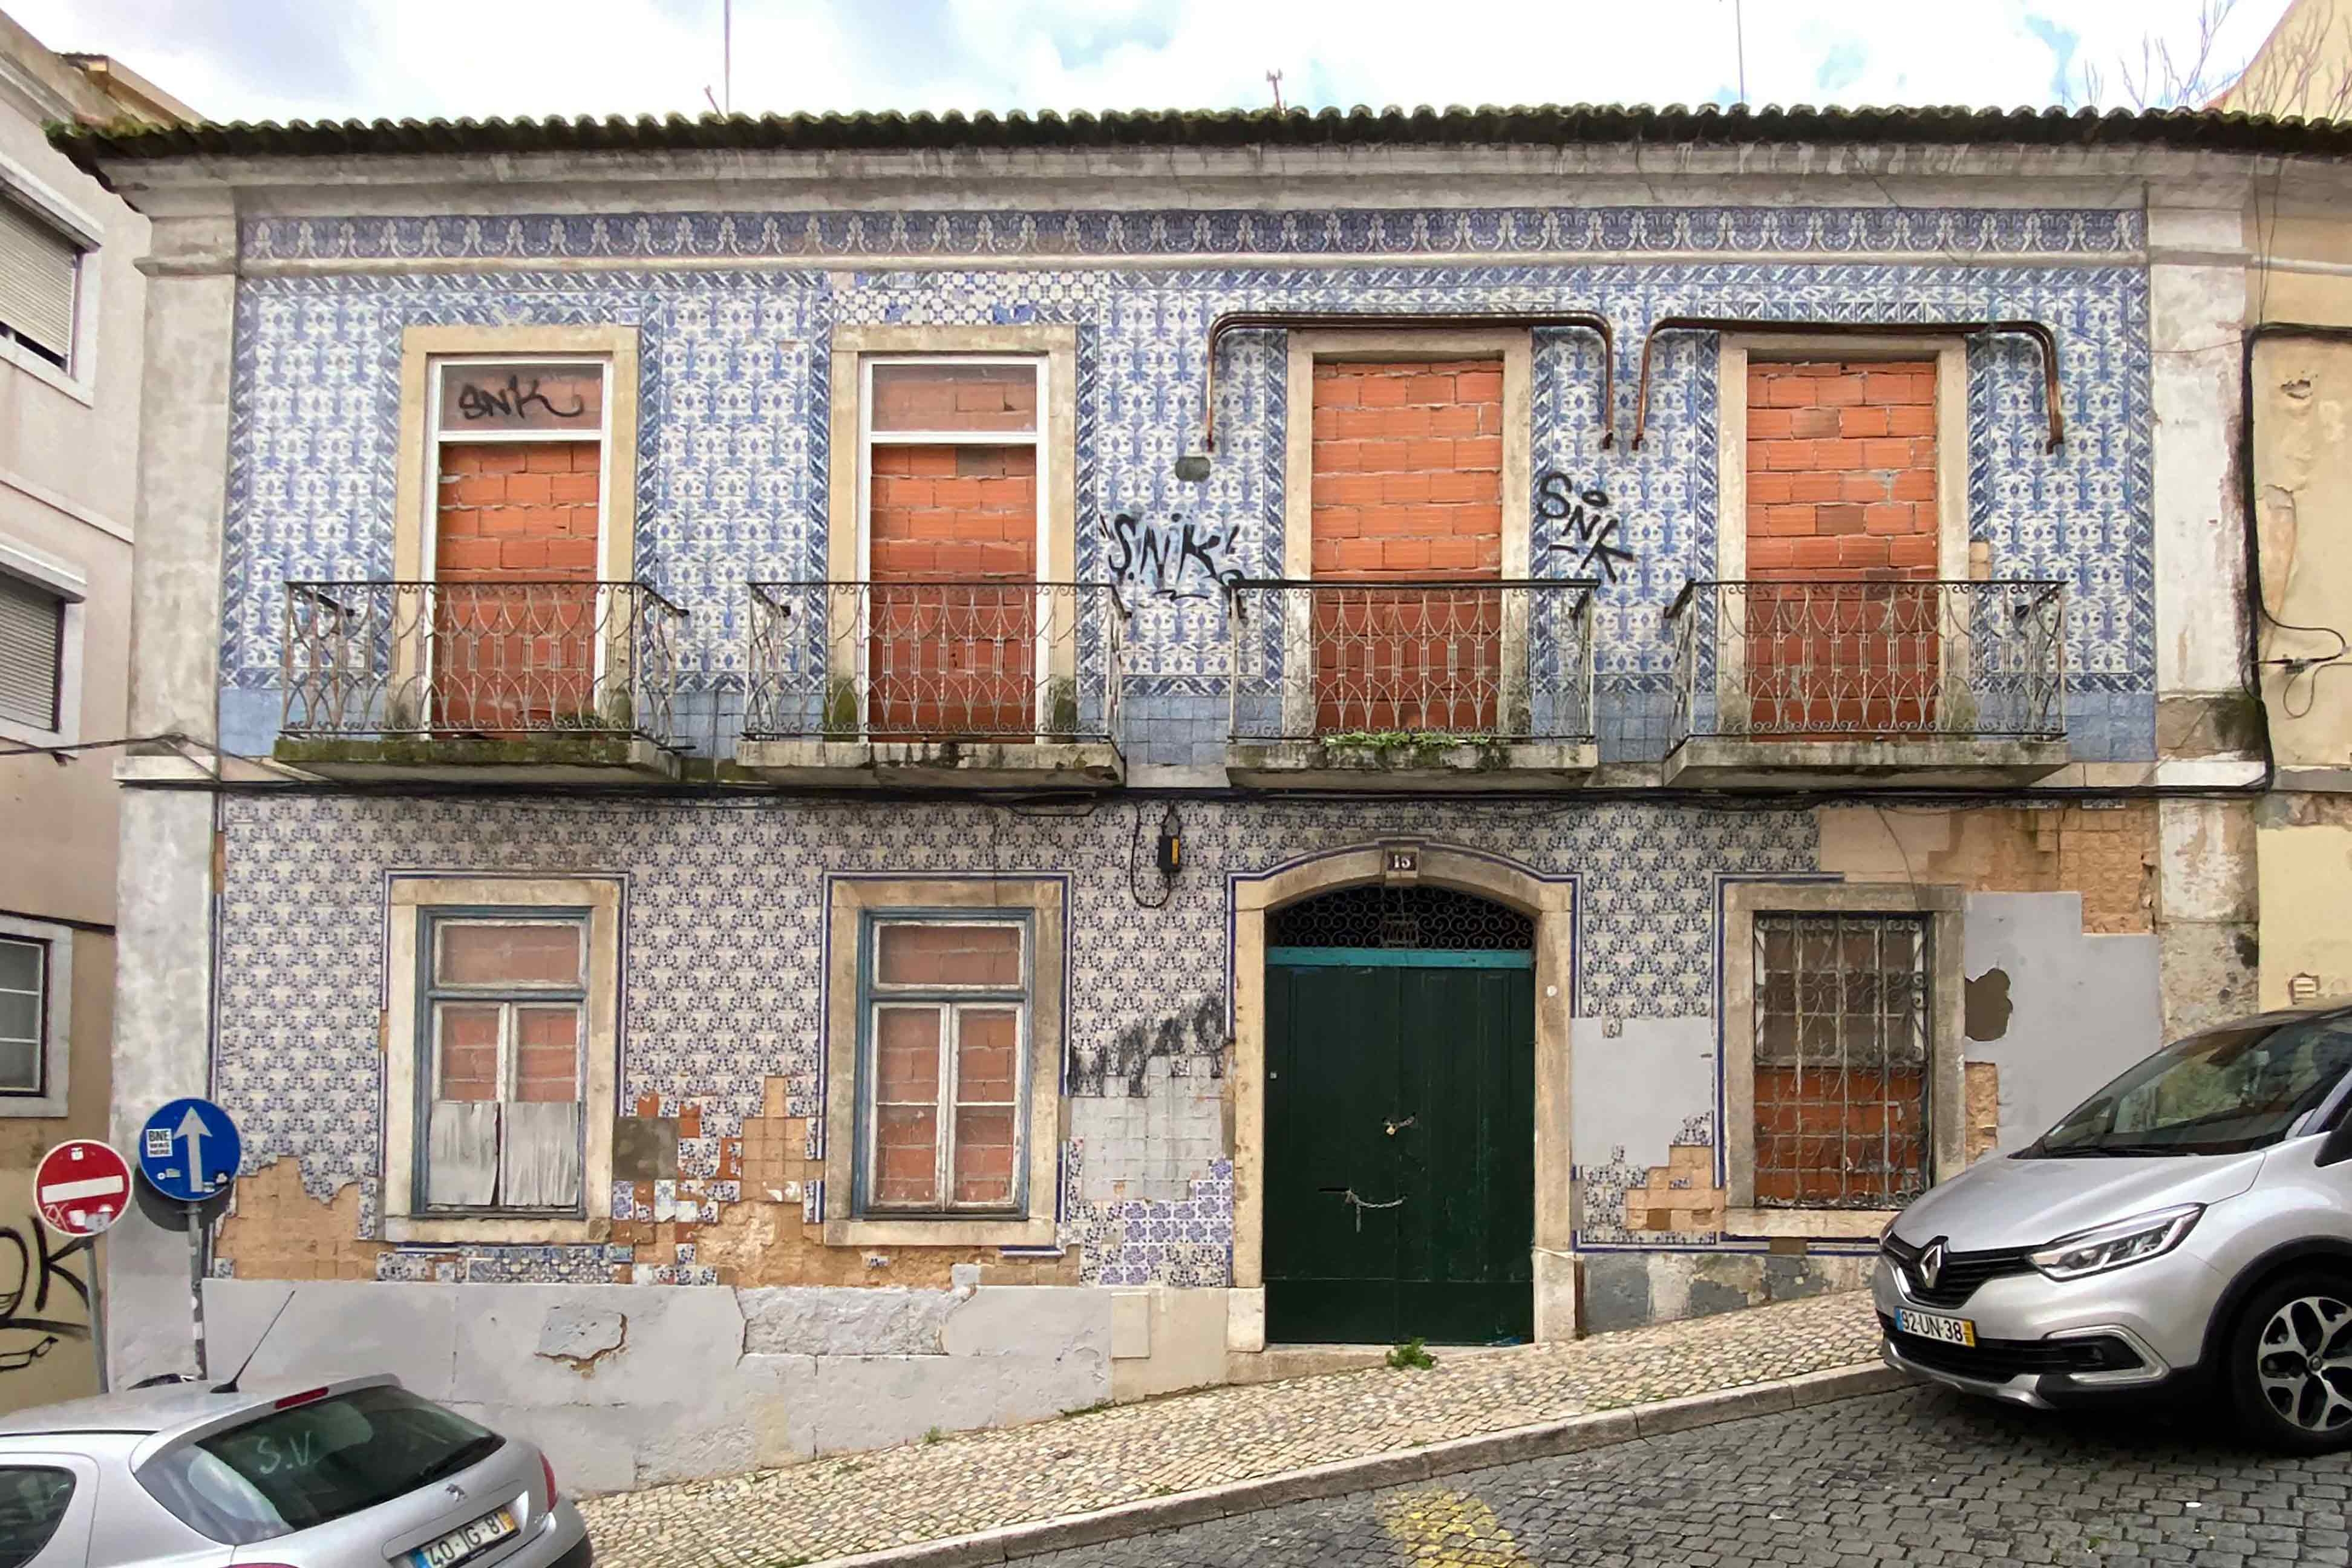 Housing in Calçada do Monte | featured photograph